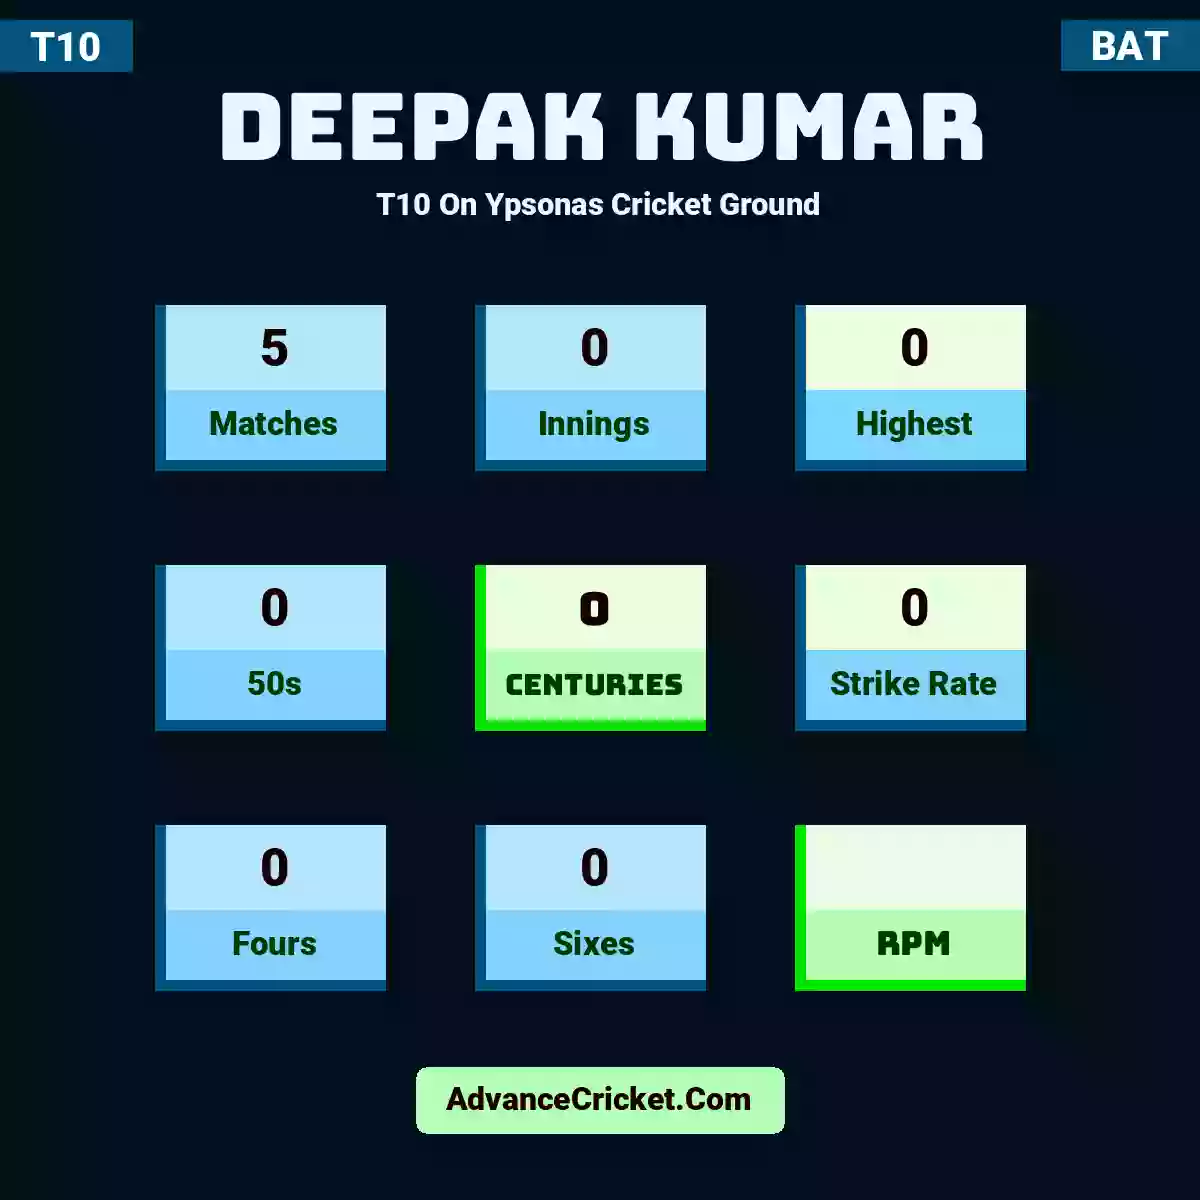 Deepak Kumar T10  On Ypsonas Cricket Ground, Deepak Kumar played 5 matches, scored 0 runs as highest, 0 half-centuries, and 0 centuries, with a strike rate of 0. D.Kumar hit 0 fours and 0 sixes.